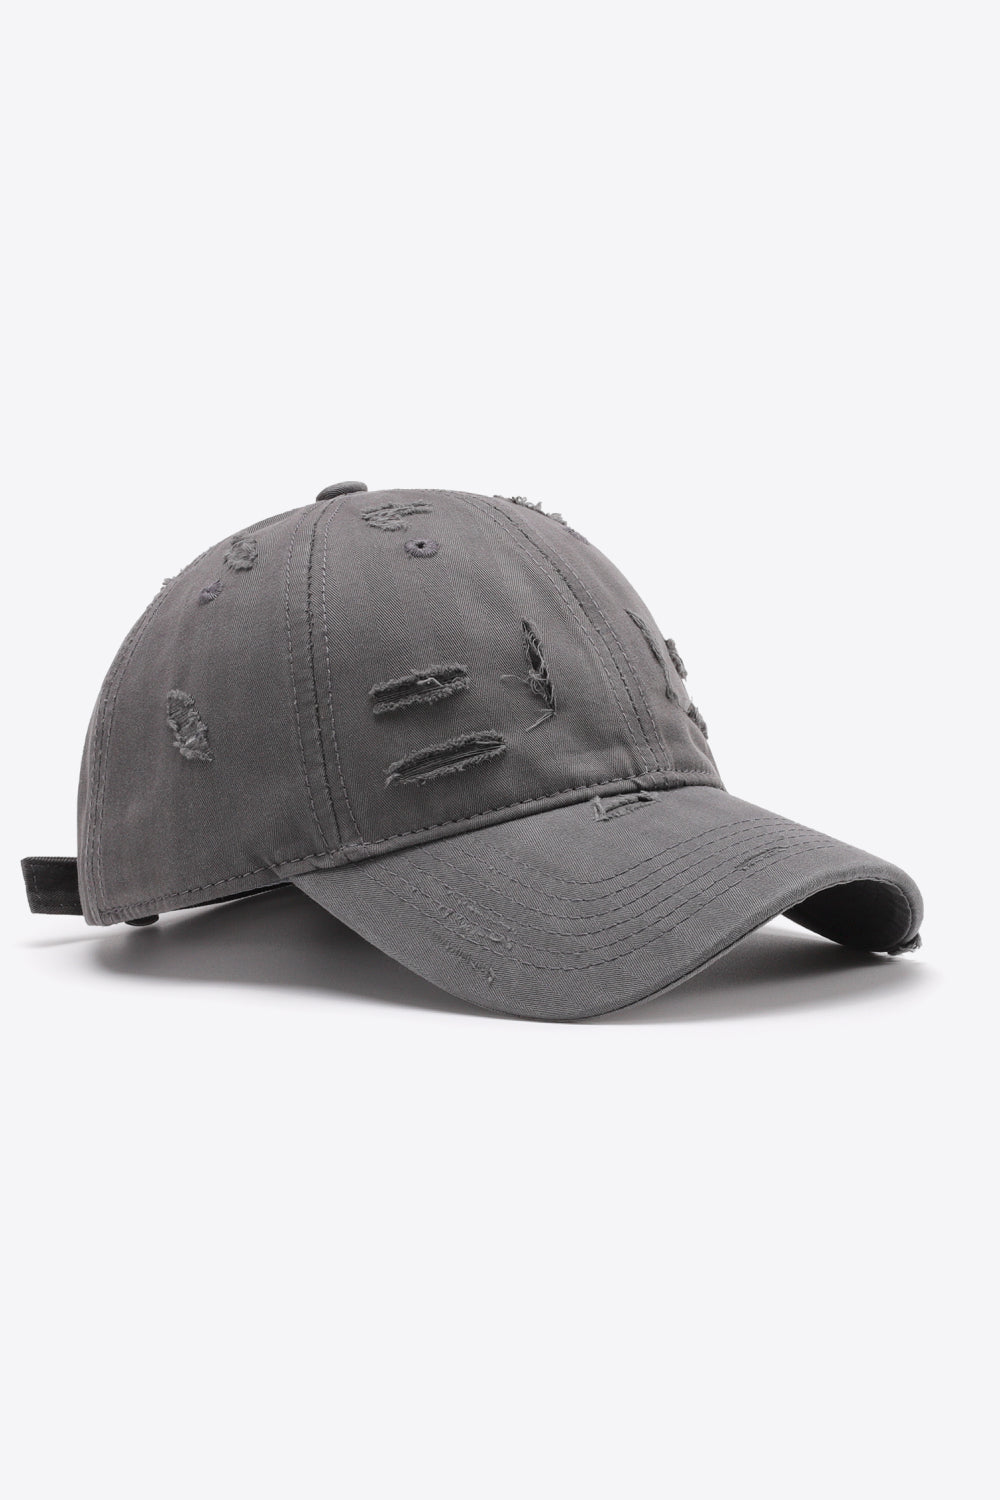 Distressed Adjustable Baseball Cap - Babbazon hats